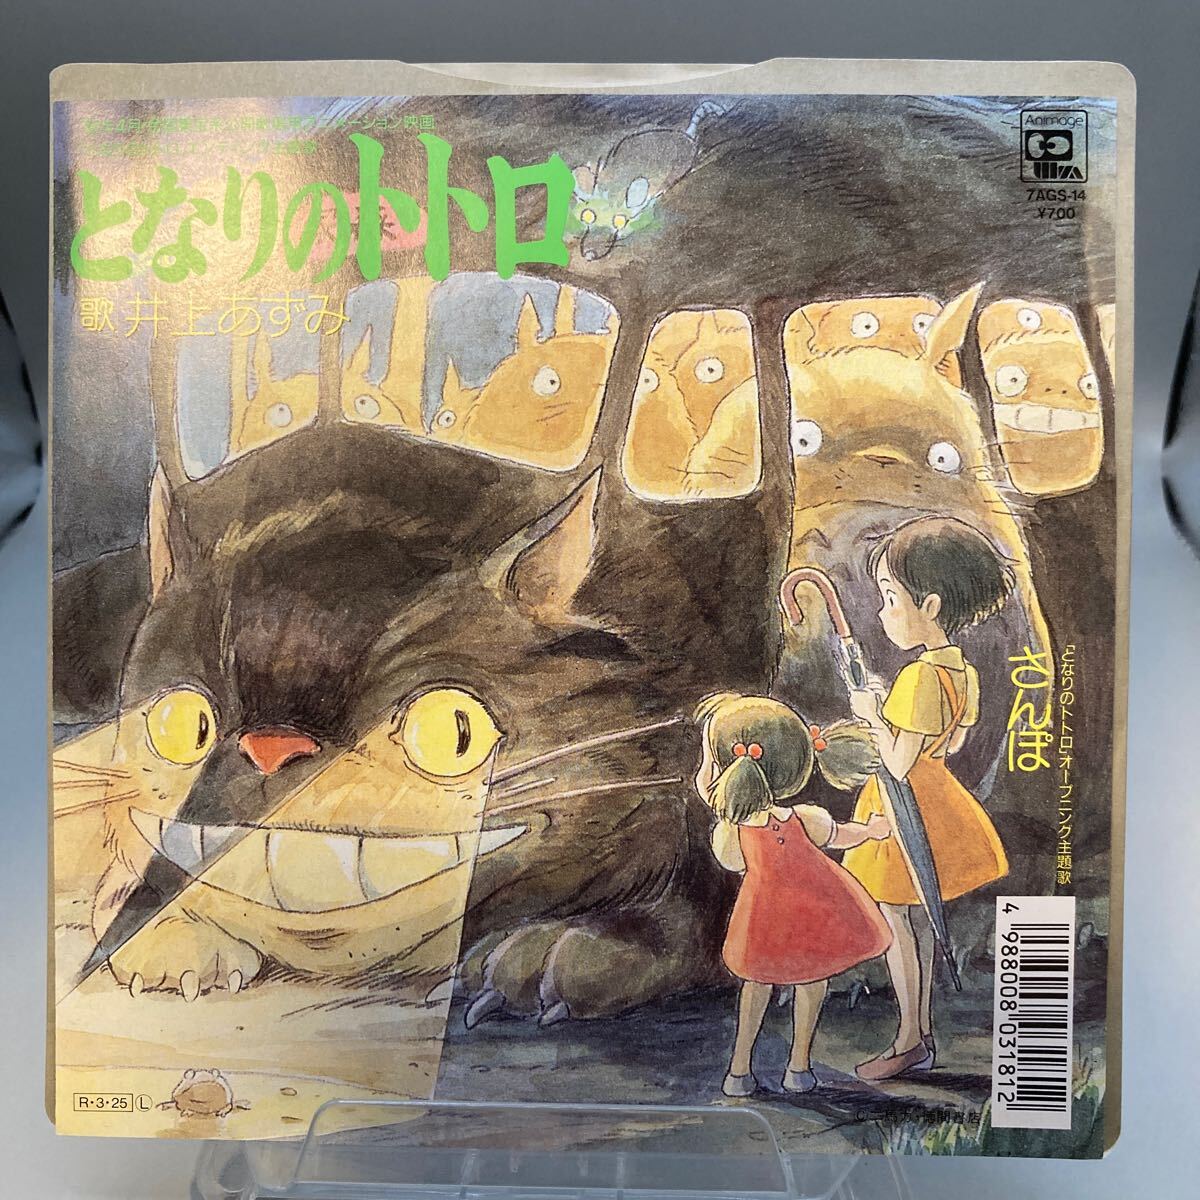  reproduction excellent ultimate beautiful record EP/ Inoue .../ Tonari no Totoro cw san ./ anime movie [ Tonari no Totoro ]../ Miyazaki .,. stone yield /1988 year 3 month 